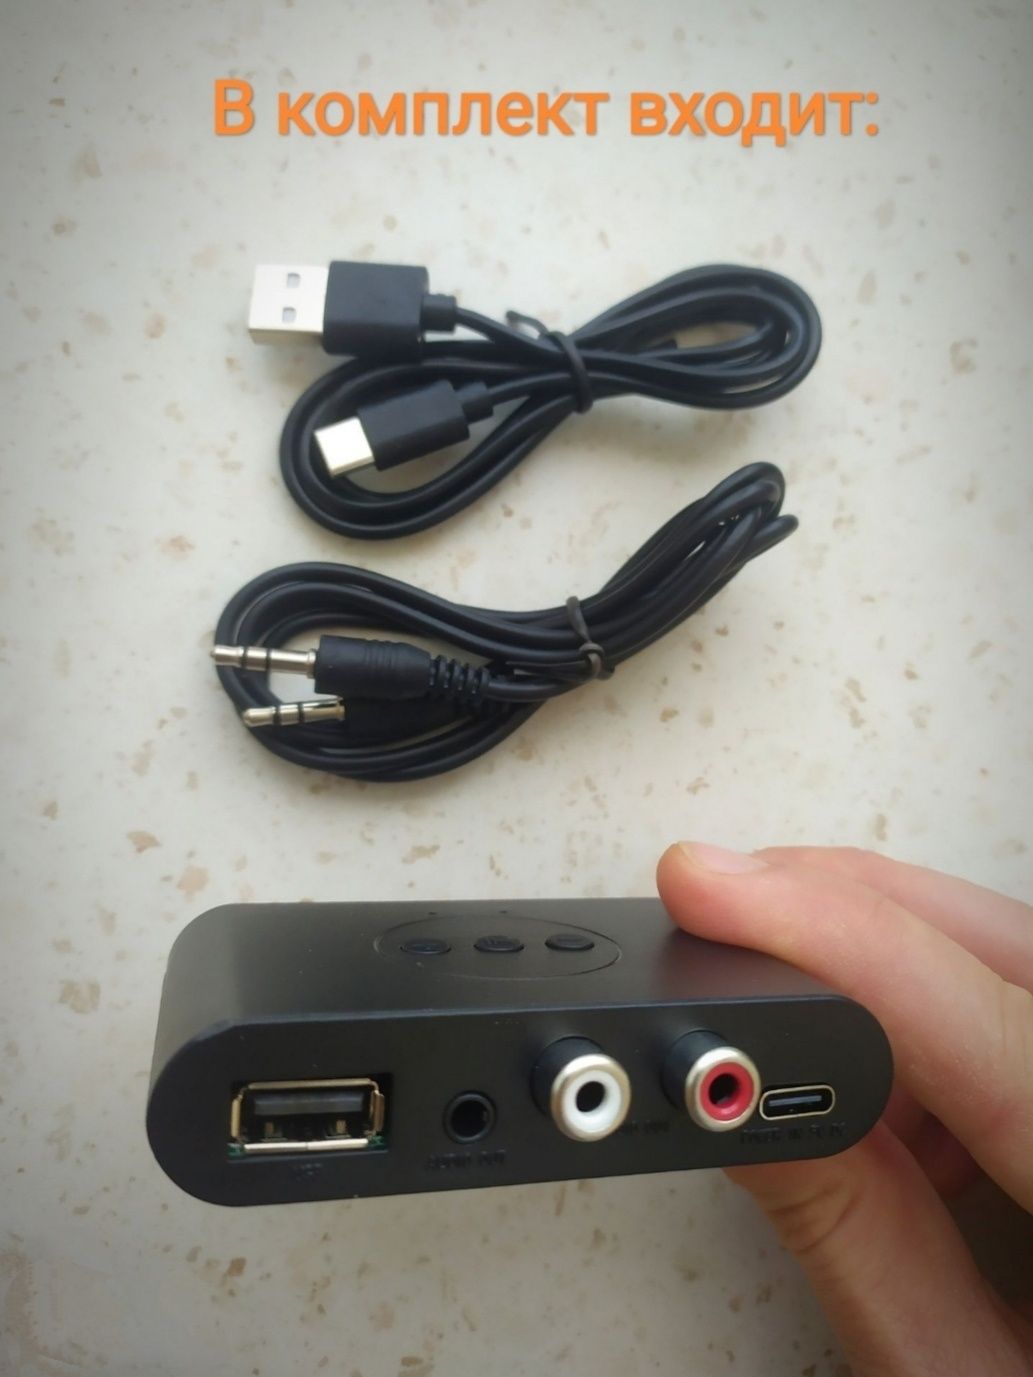 Мультимодуль Bluetooth 5.0 AUX , USB флэшка в Авто Аукс RCA